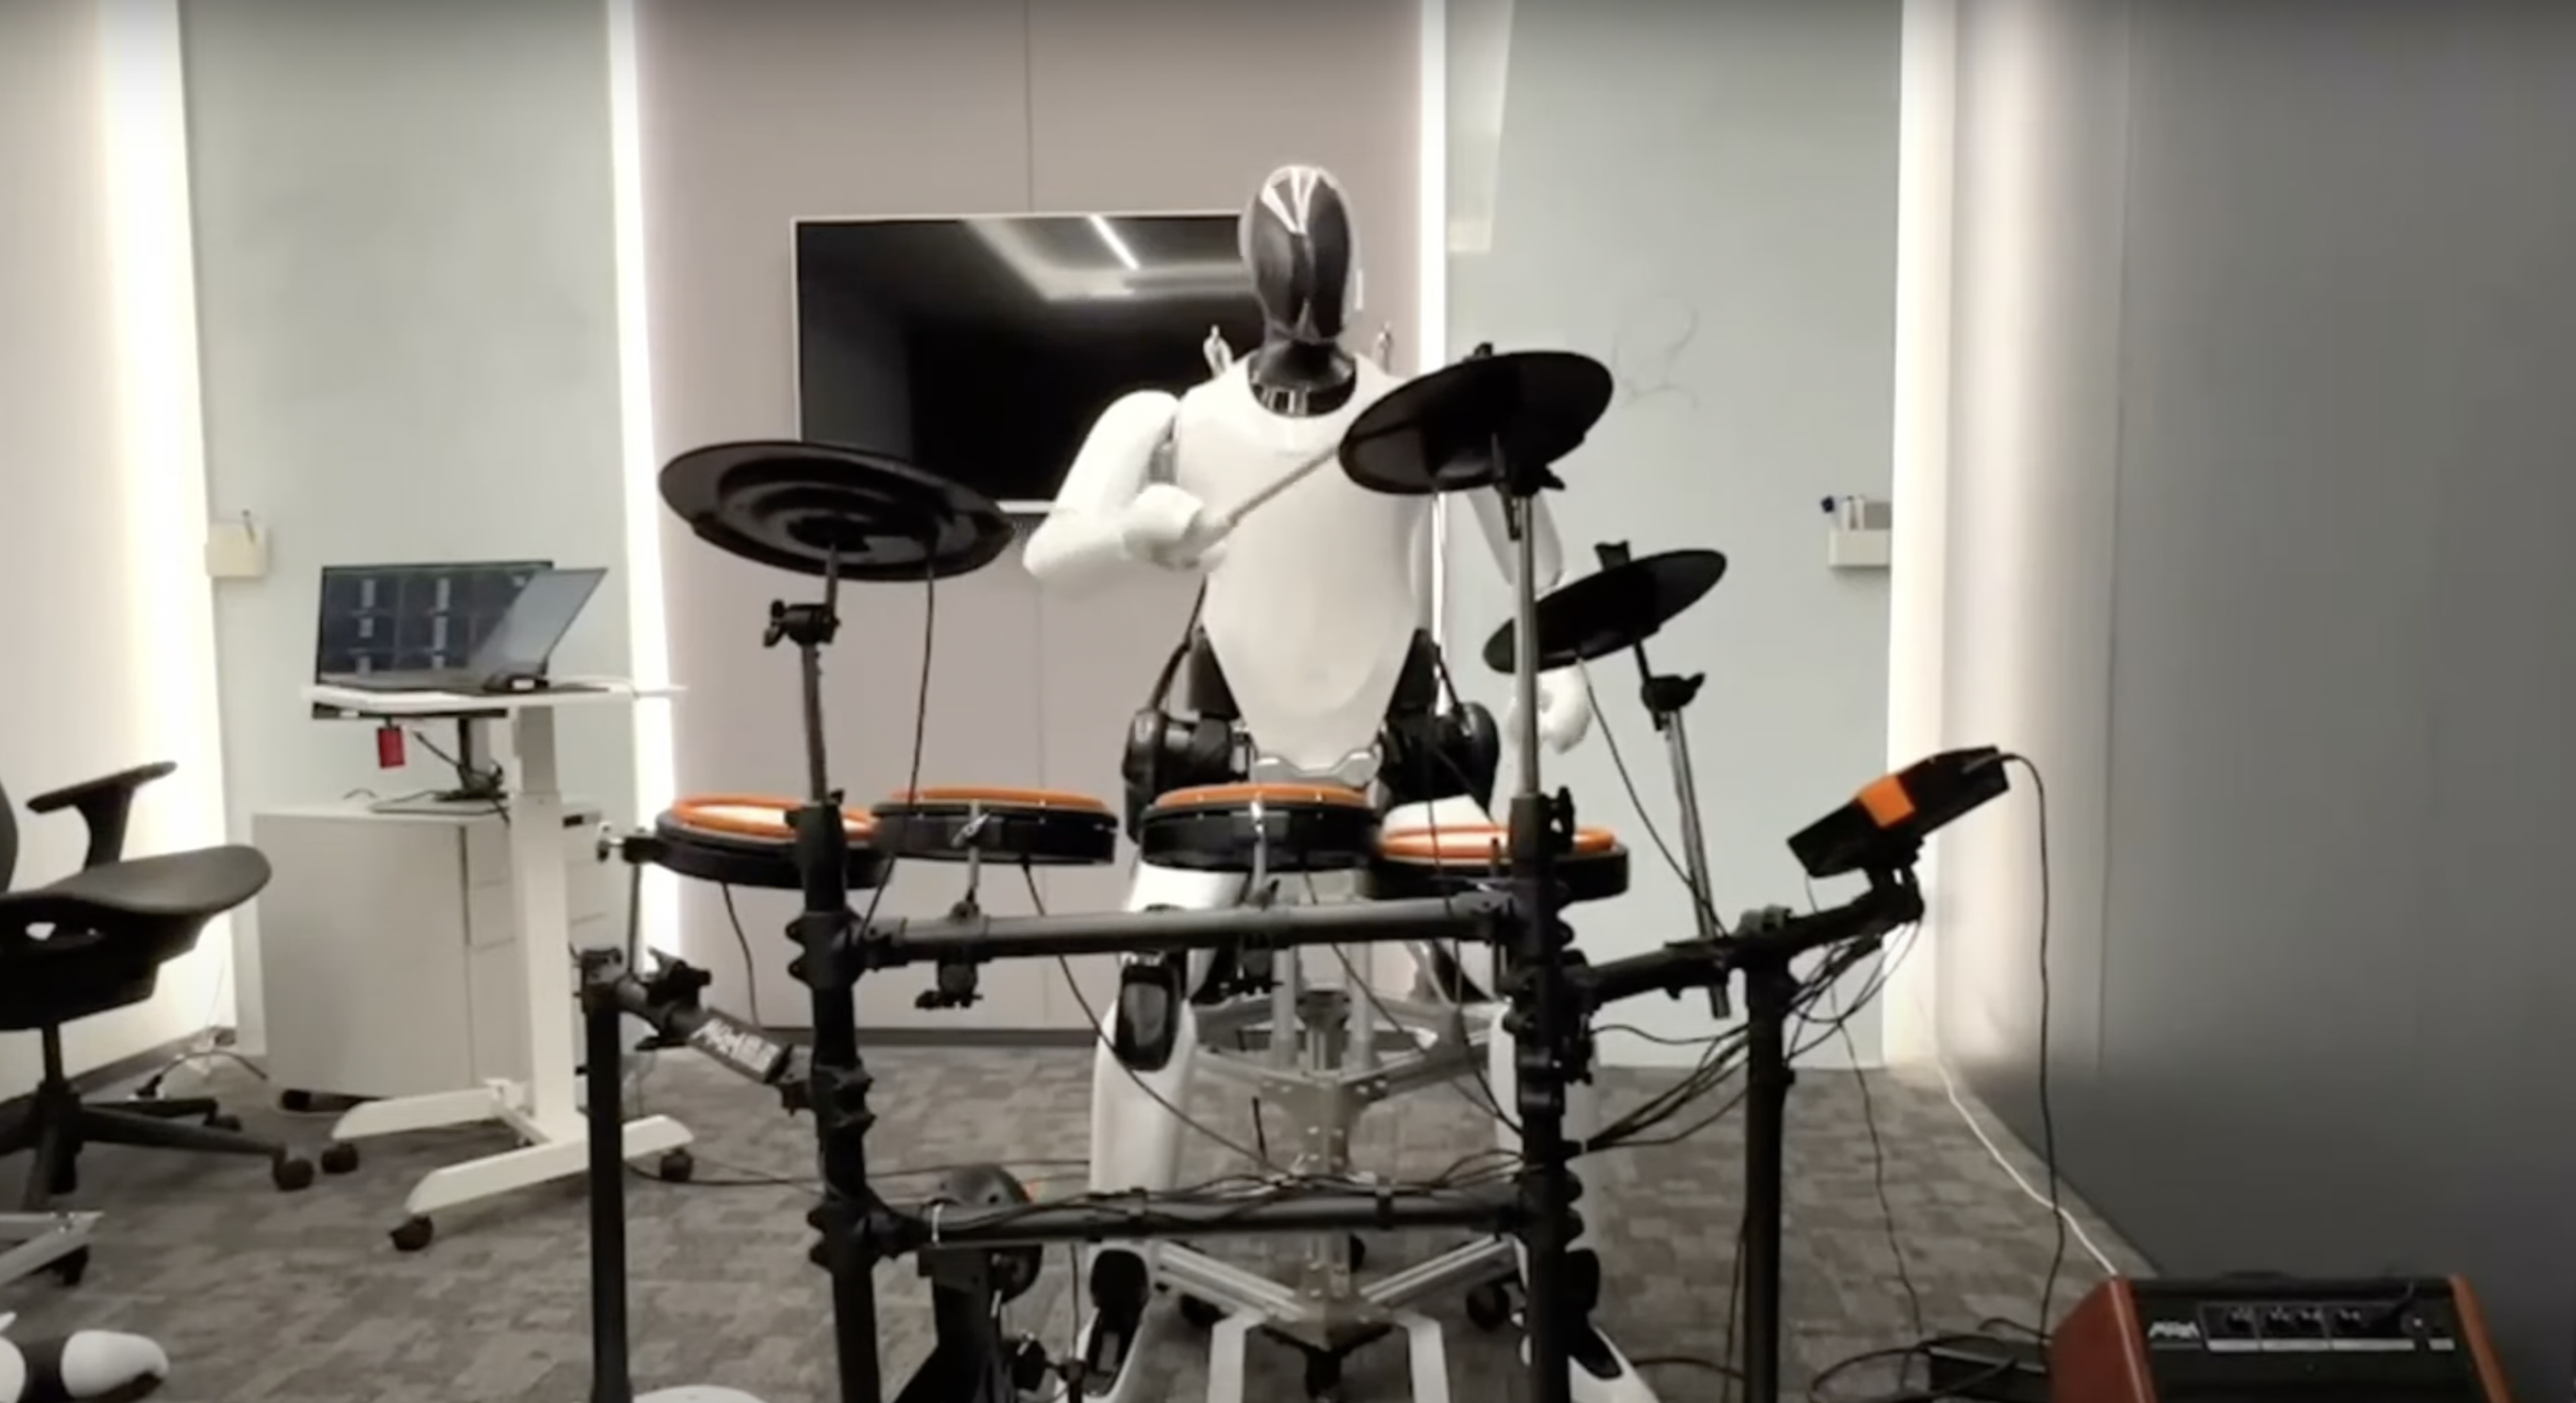 xiaomi's cyberone robot drumming